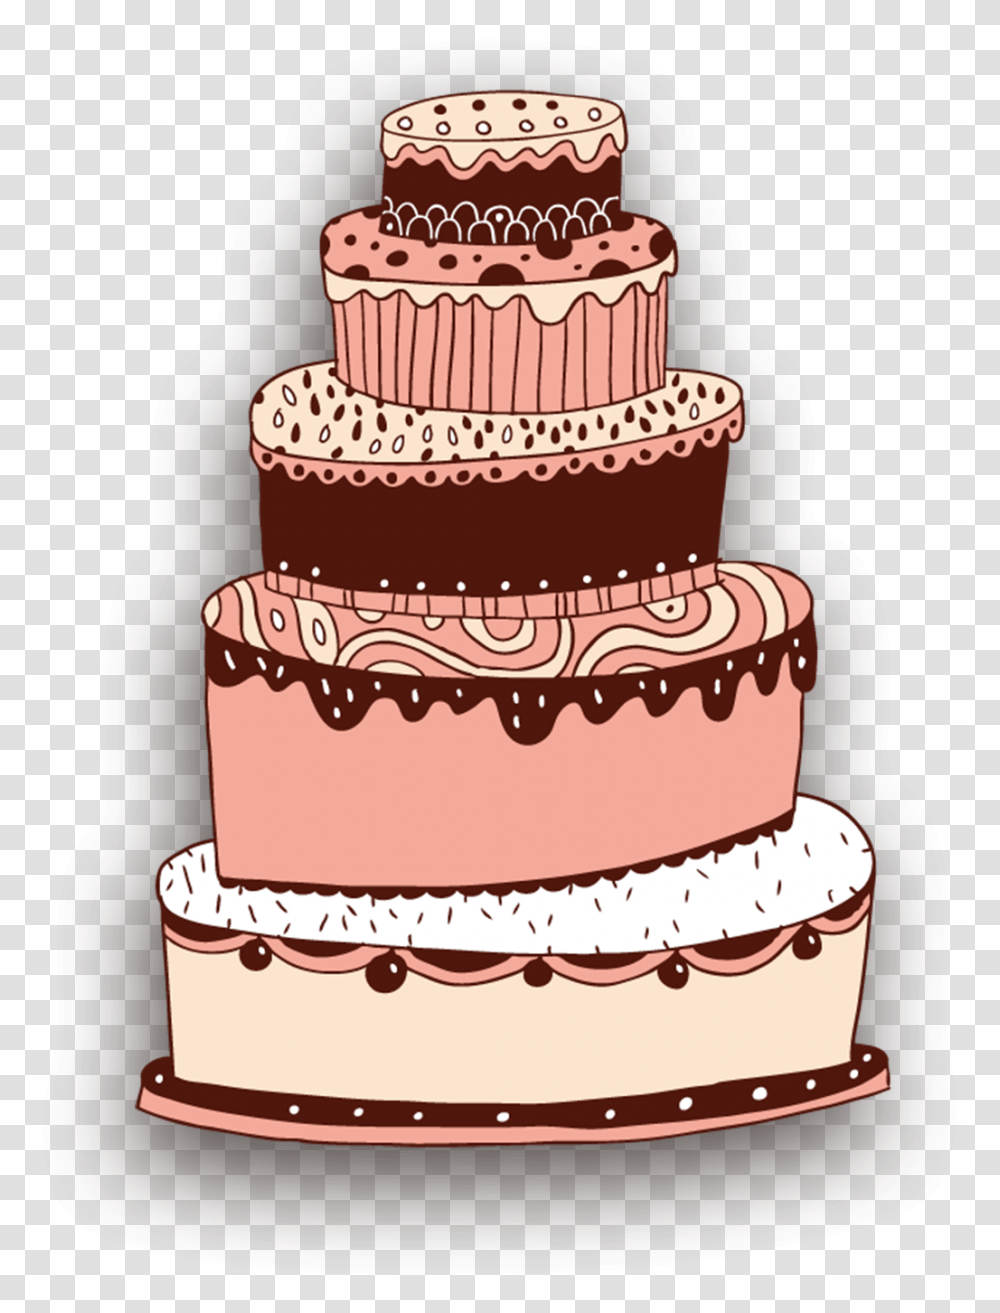 Cartoon Cake Background, Dessert, Food, Birthday Cake, Wedding Cake Transparent Png